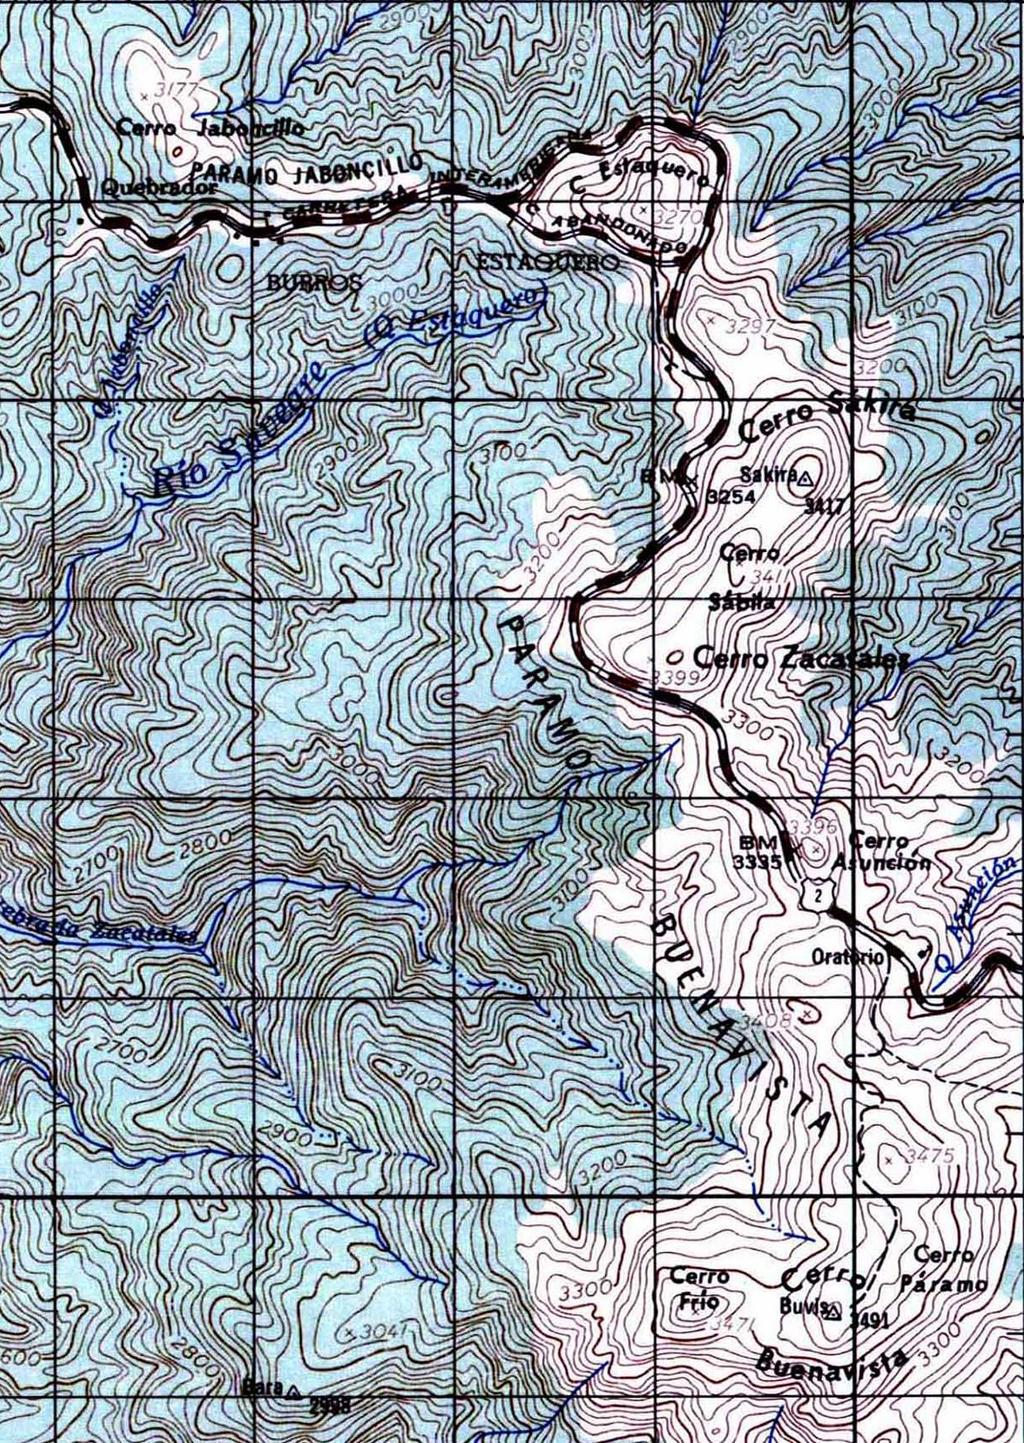 Figure 3. A portion of the 1:50,000-scale Vueltas topographic quadrangle published by the Institúto Geográfico Nacional, showing the Buenavista páramo.